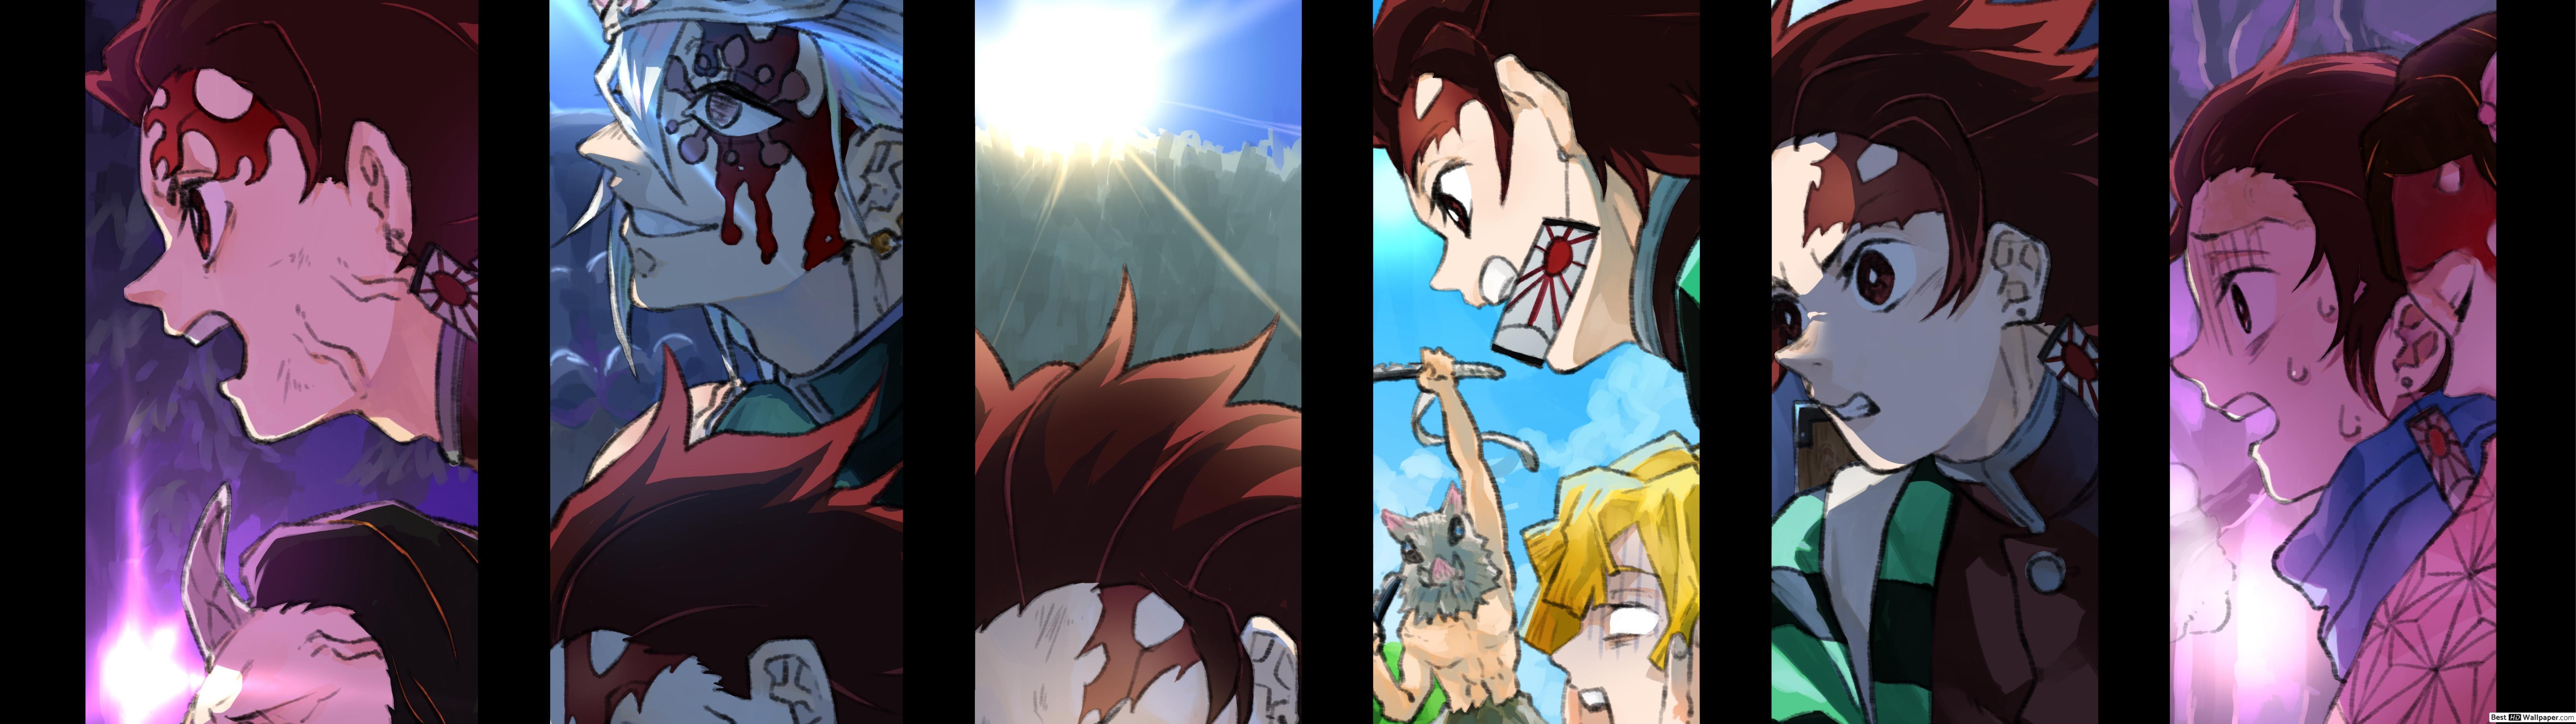 Wallpaper : anime, original characters, dual monitors, Norah Bright, Nanako  Ganesagi, Shirogane Usagi, ART, screenshot 3840x1080 - kejsirajbek - 6728 -  HD Wallpapers - WallHere